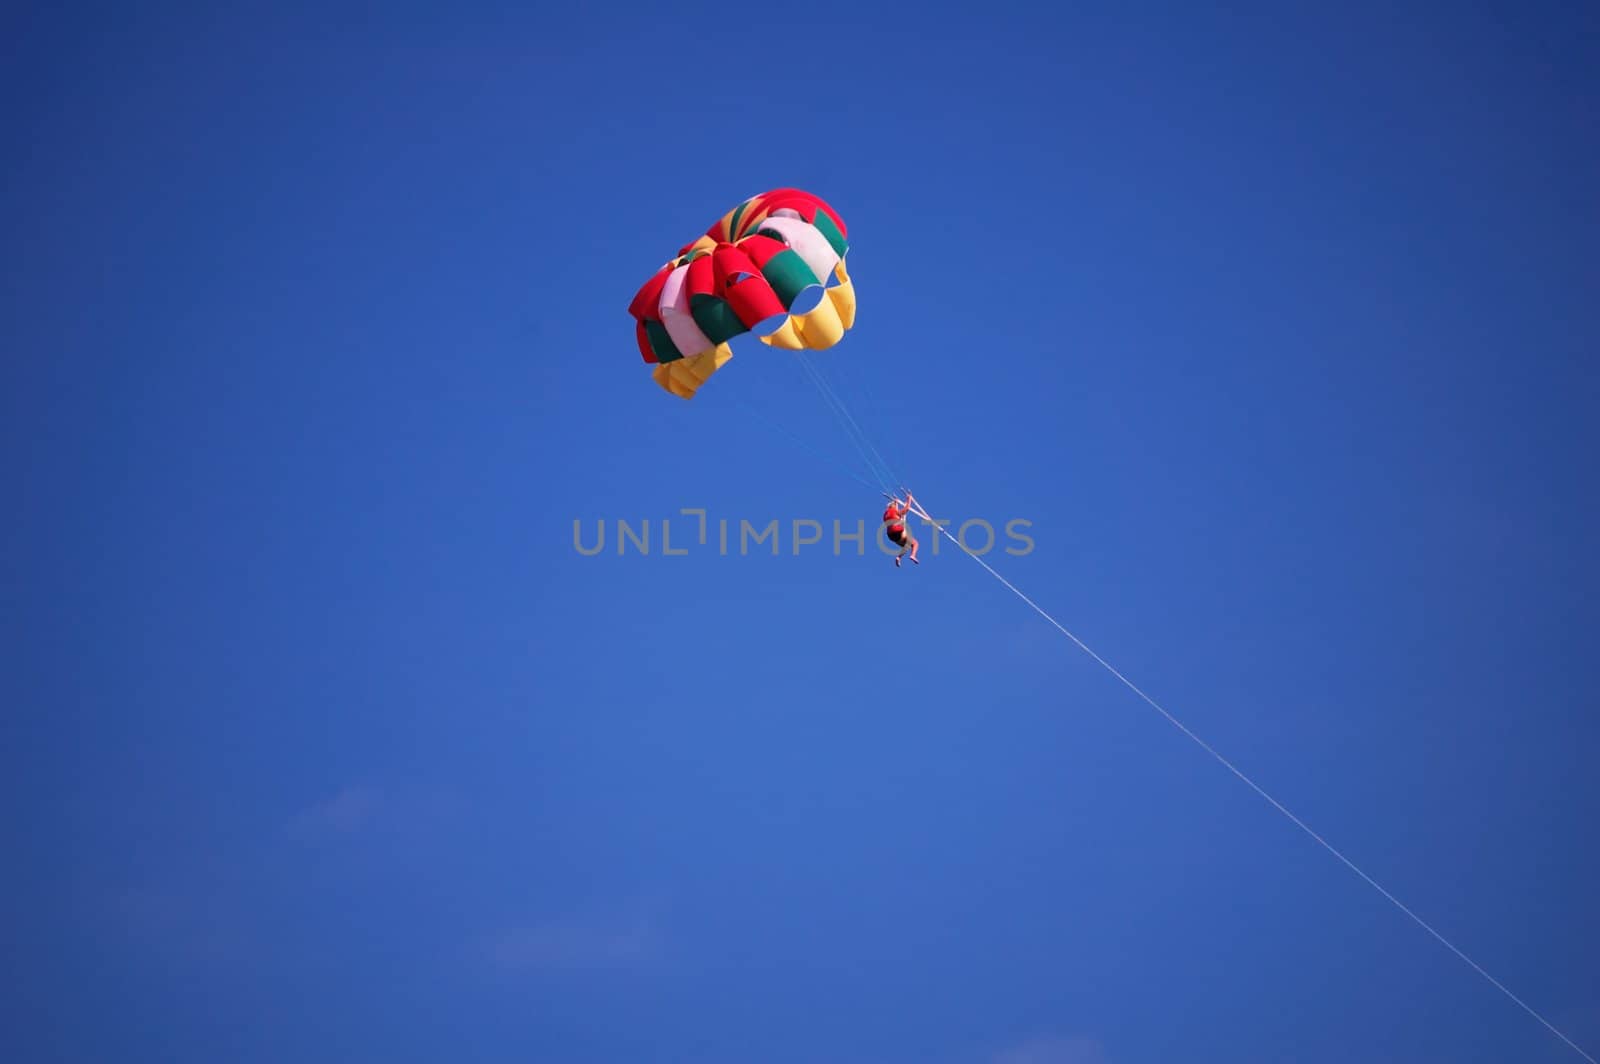 flights on a parachute by kasim